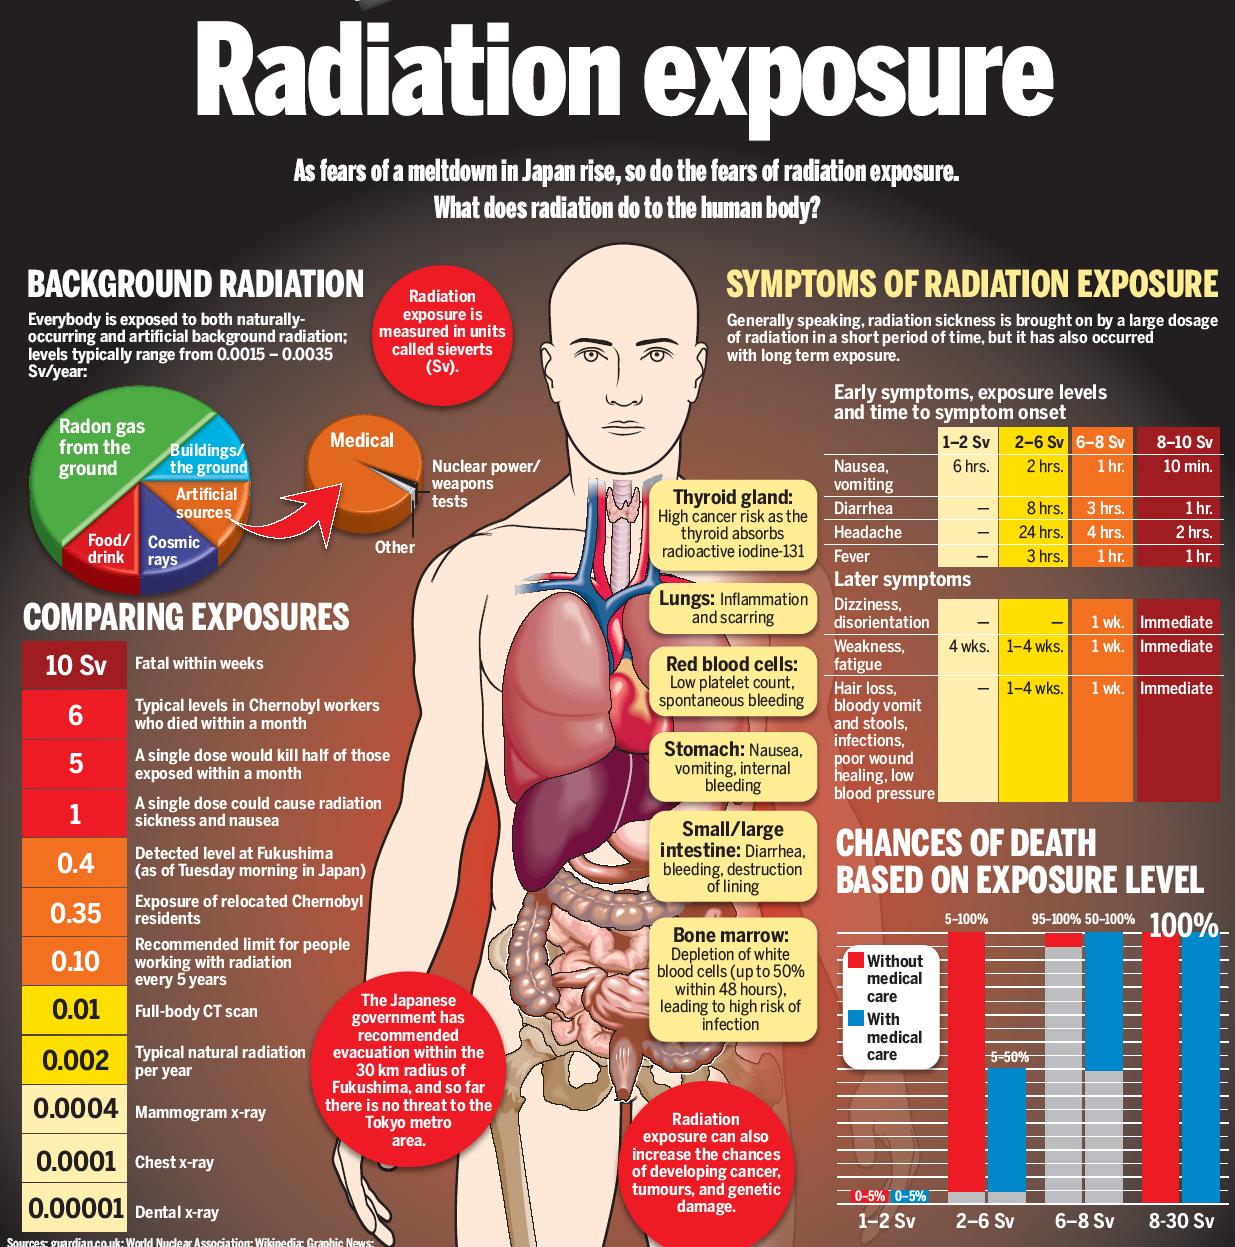 radium effects